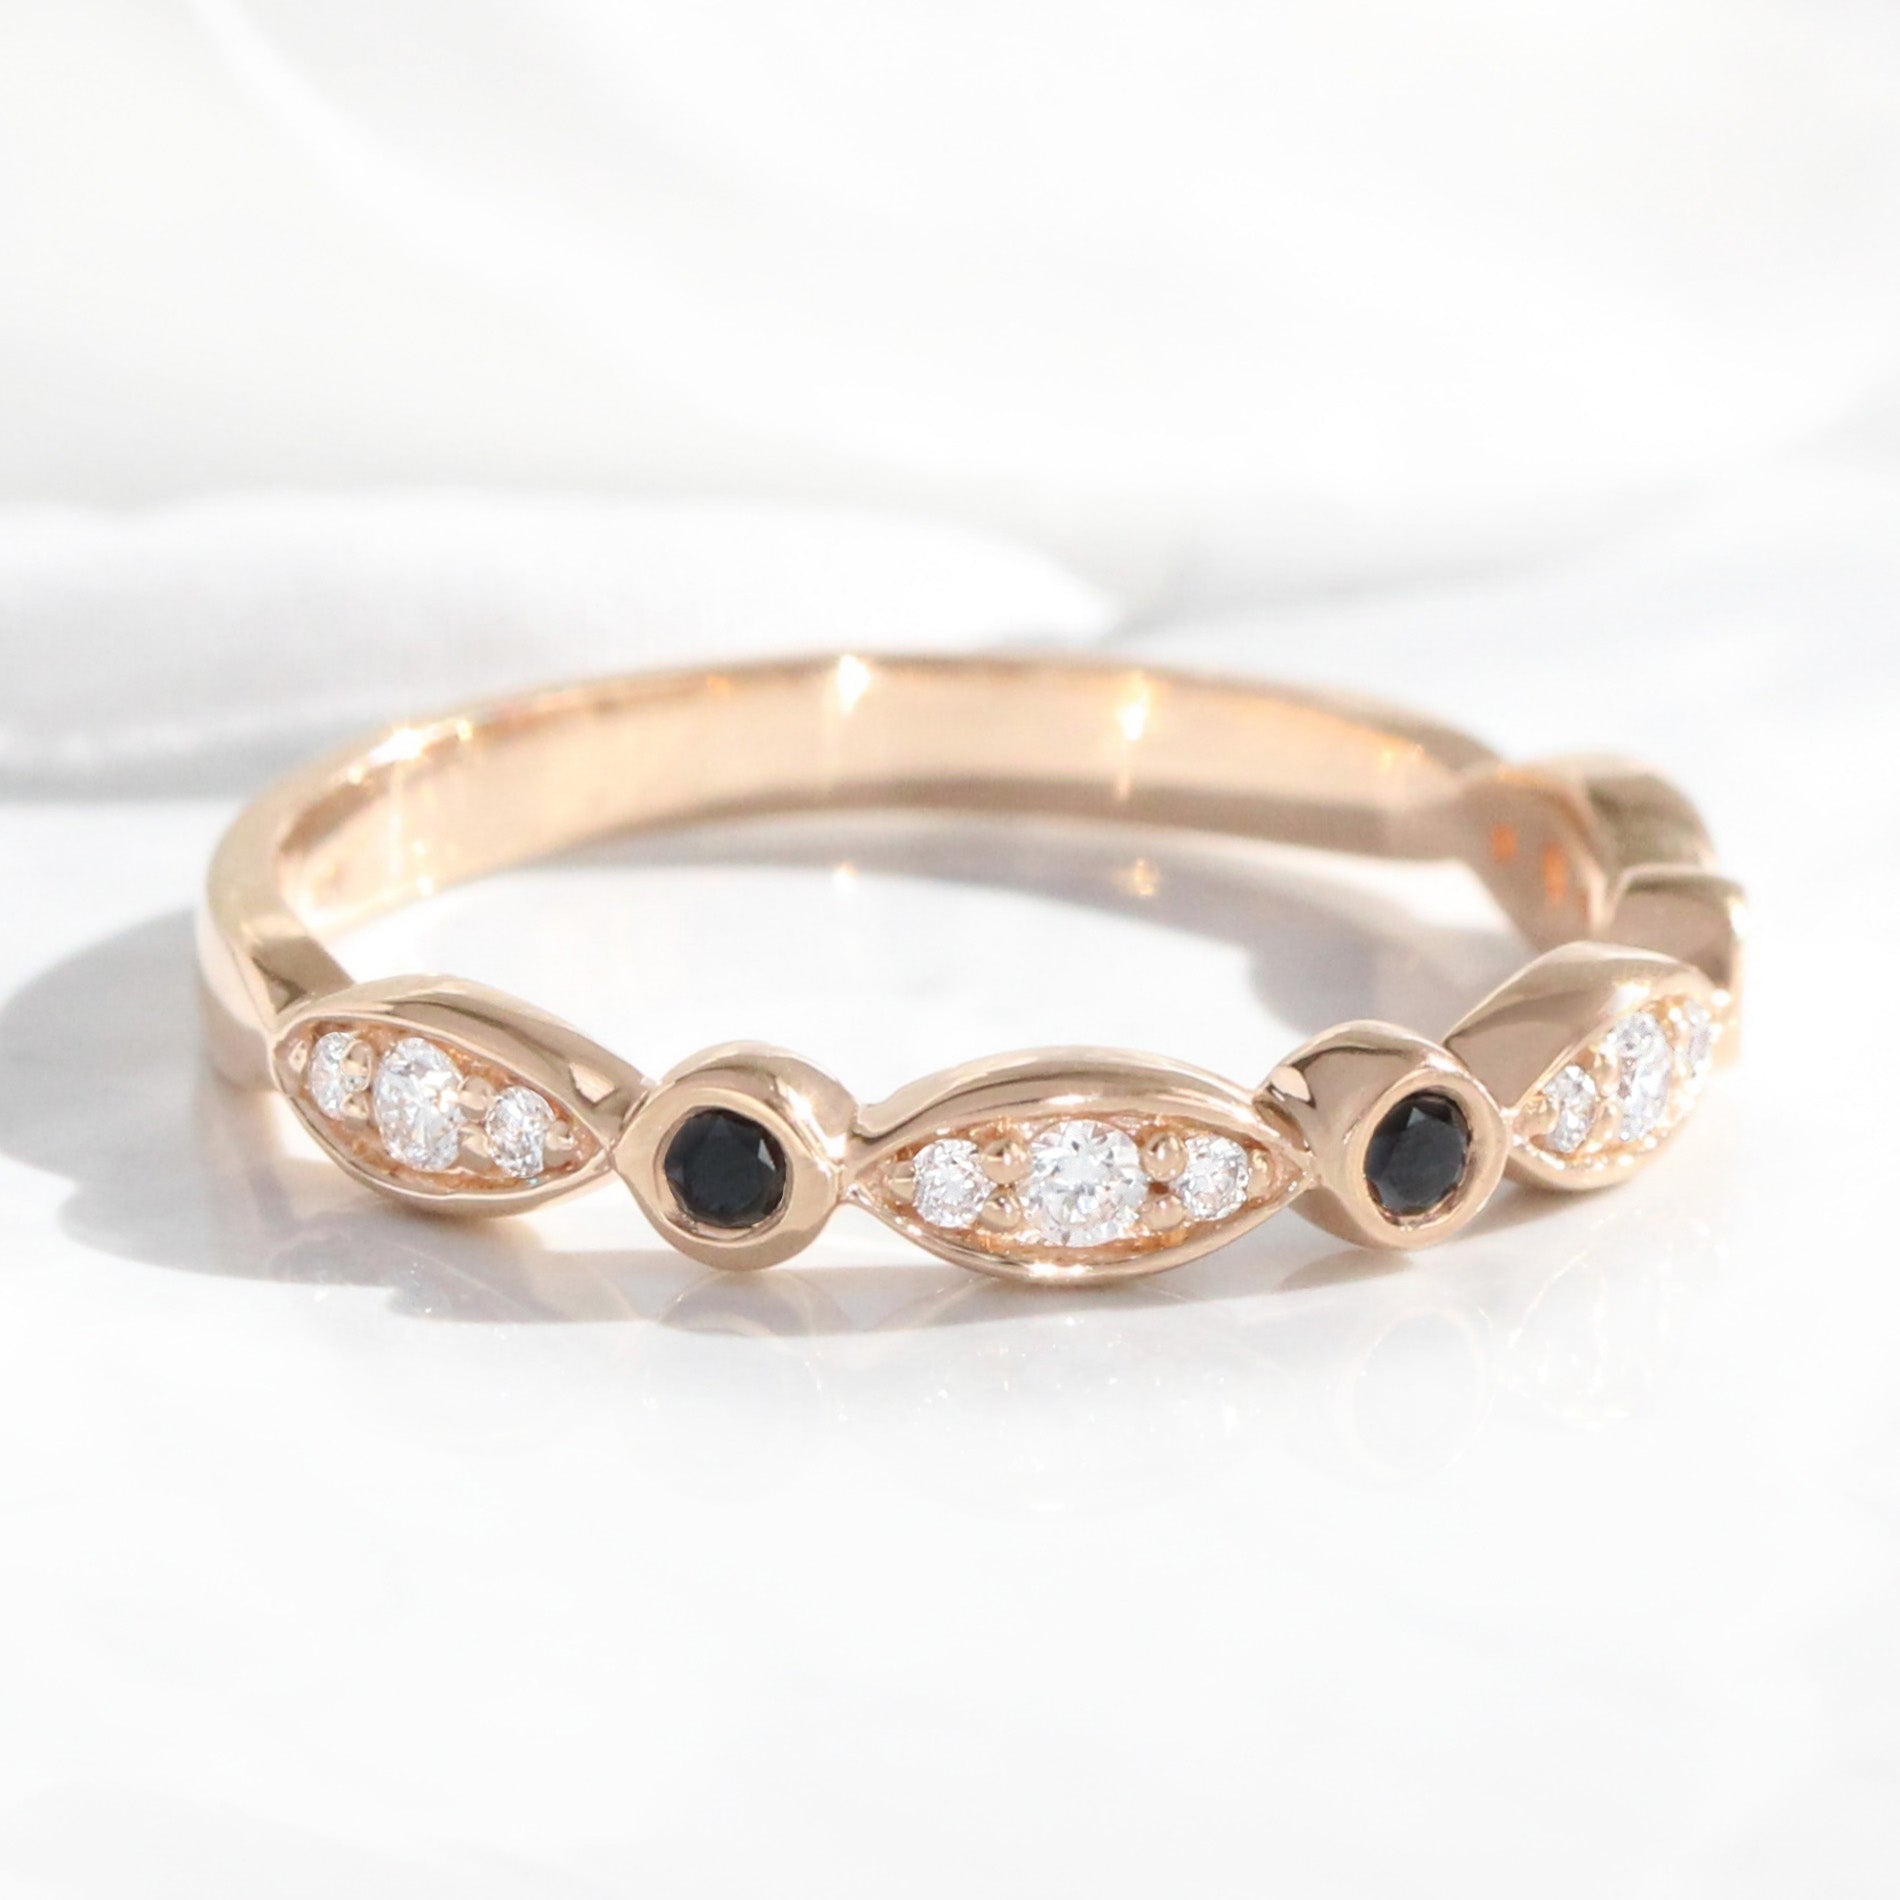 Bezel white and black diamond wedding ring rose gold scalloped half eternity band la more design jewelry